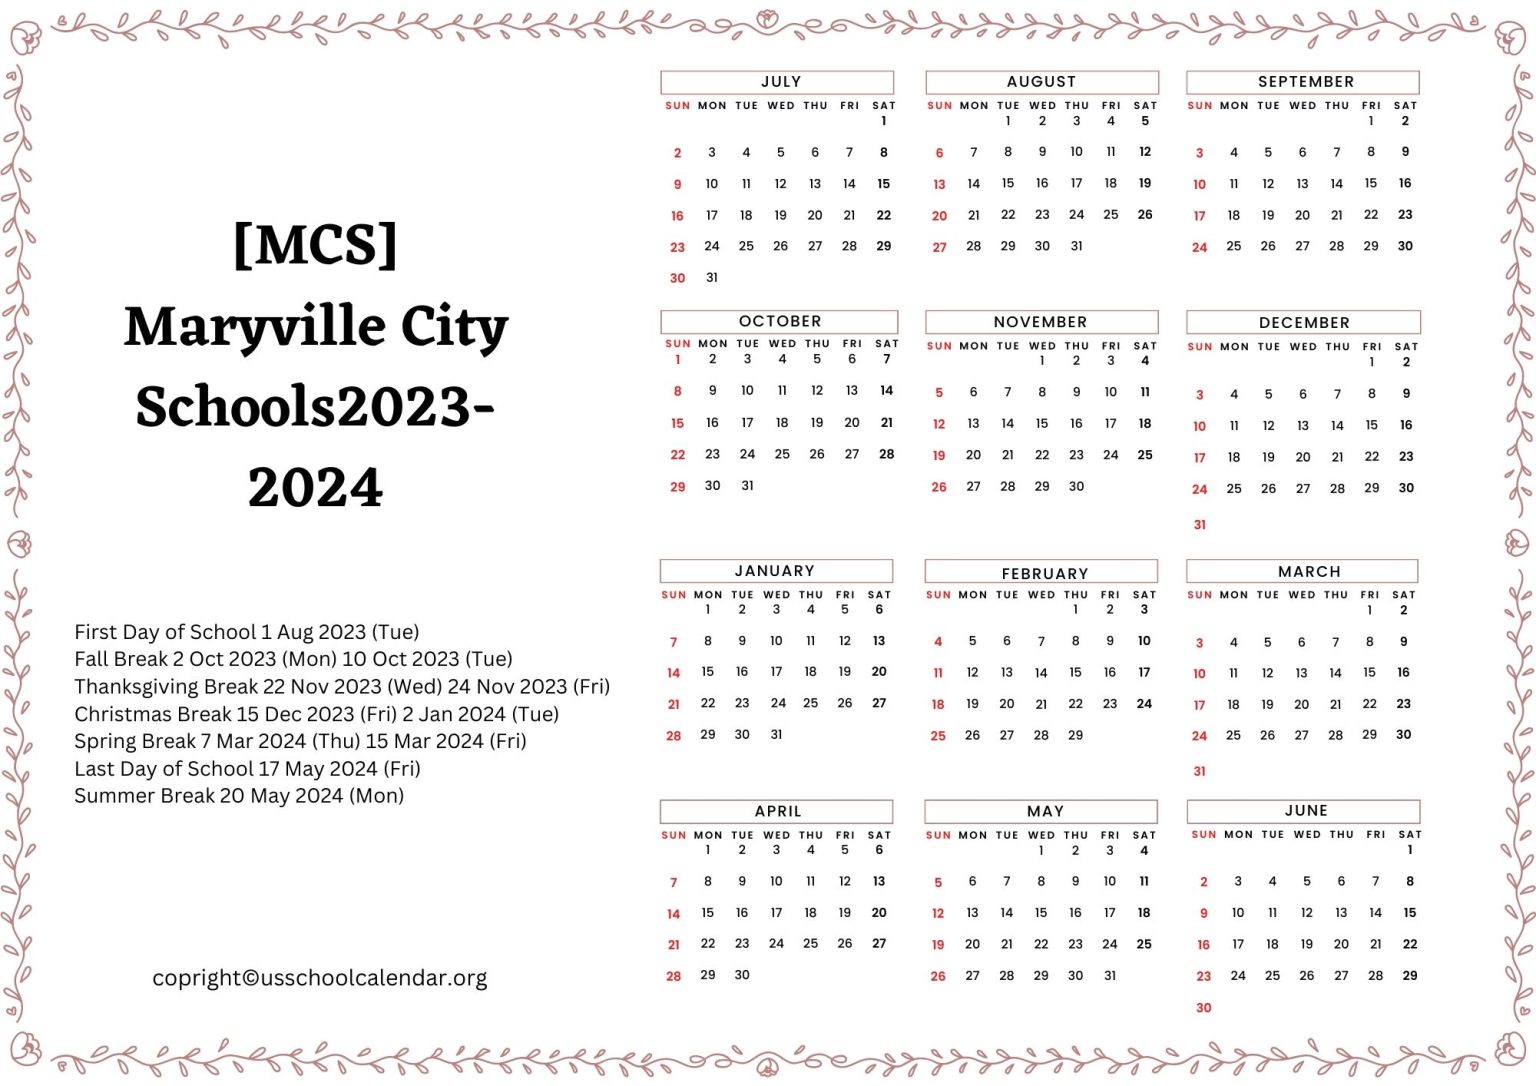 [MCS] Maryville City Schools Calendar with Holidays 2023-2024